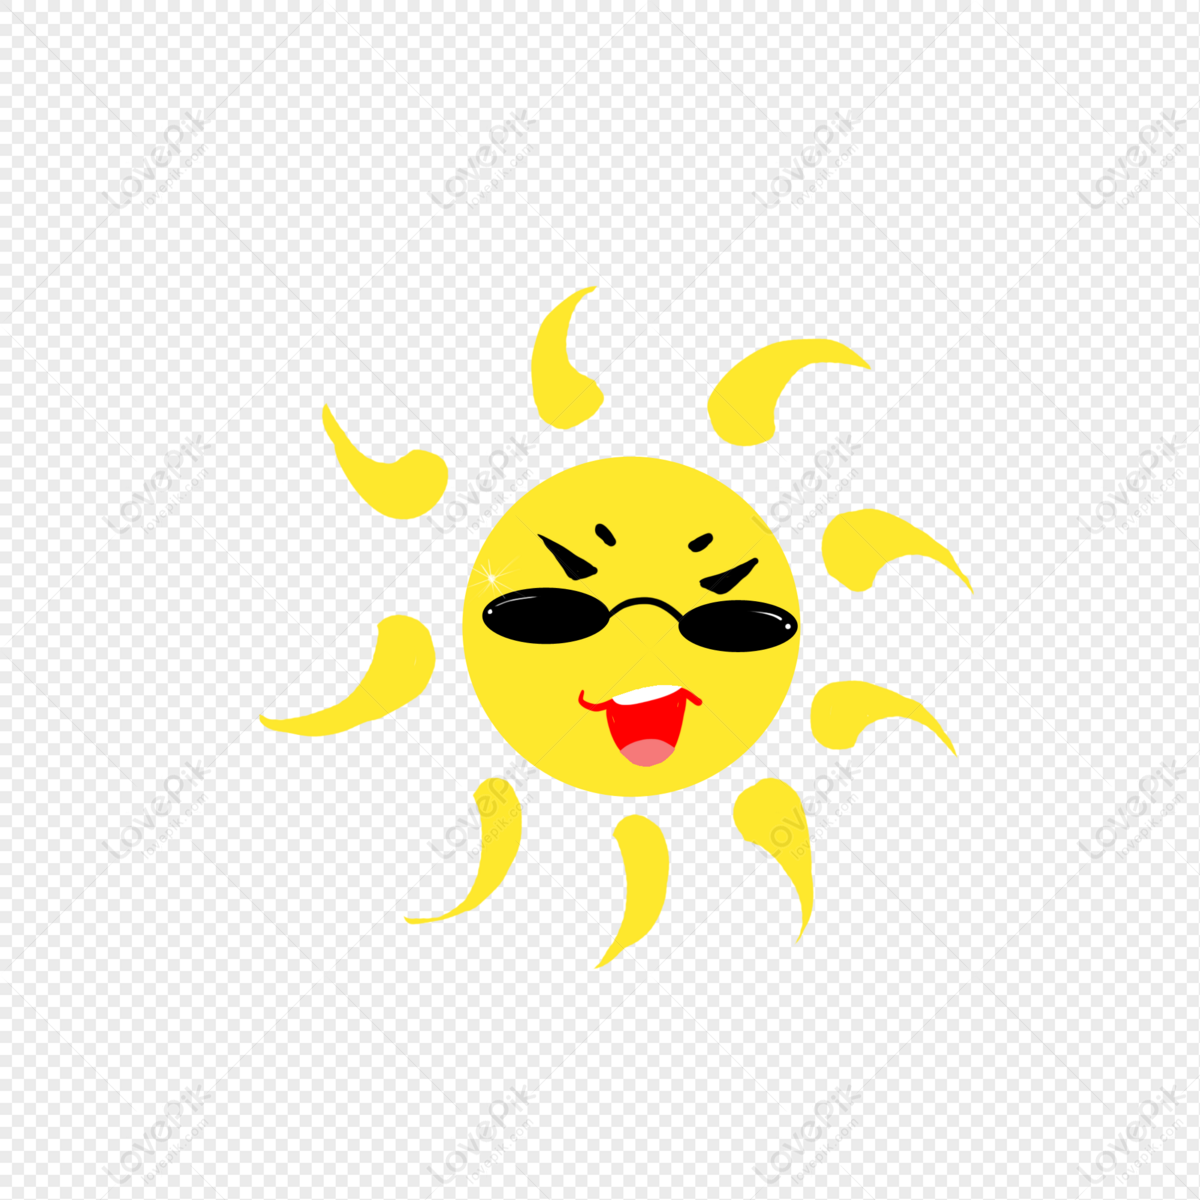 Cheerful Face of Summer Sun with Sunglasses Stock Vector - Illustration of  cartoon, orange: 70216685